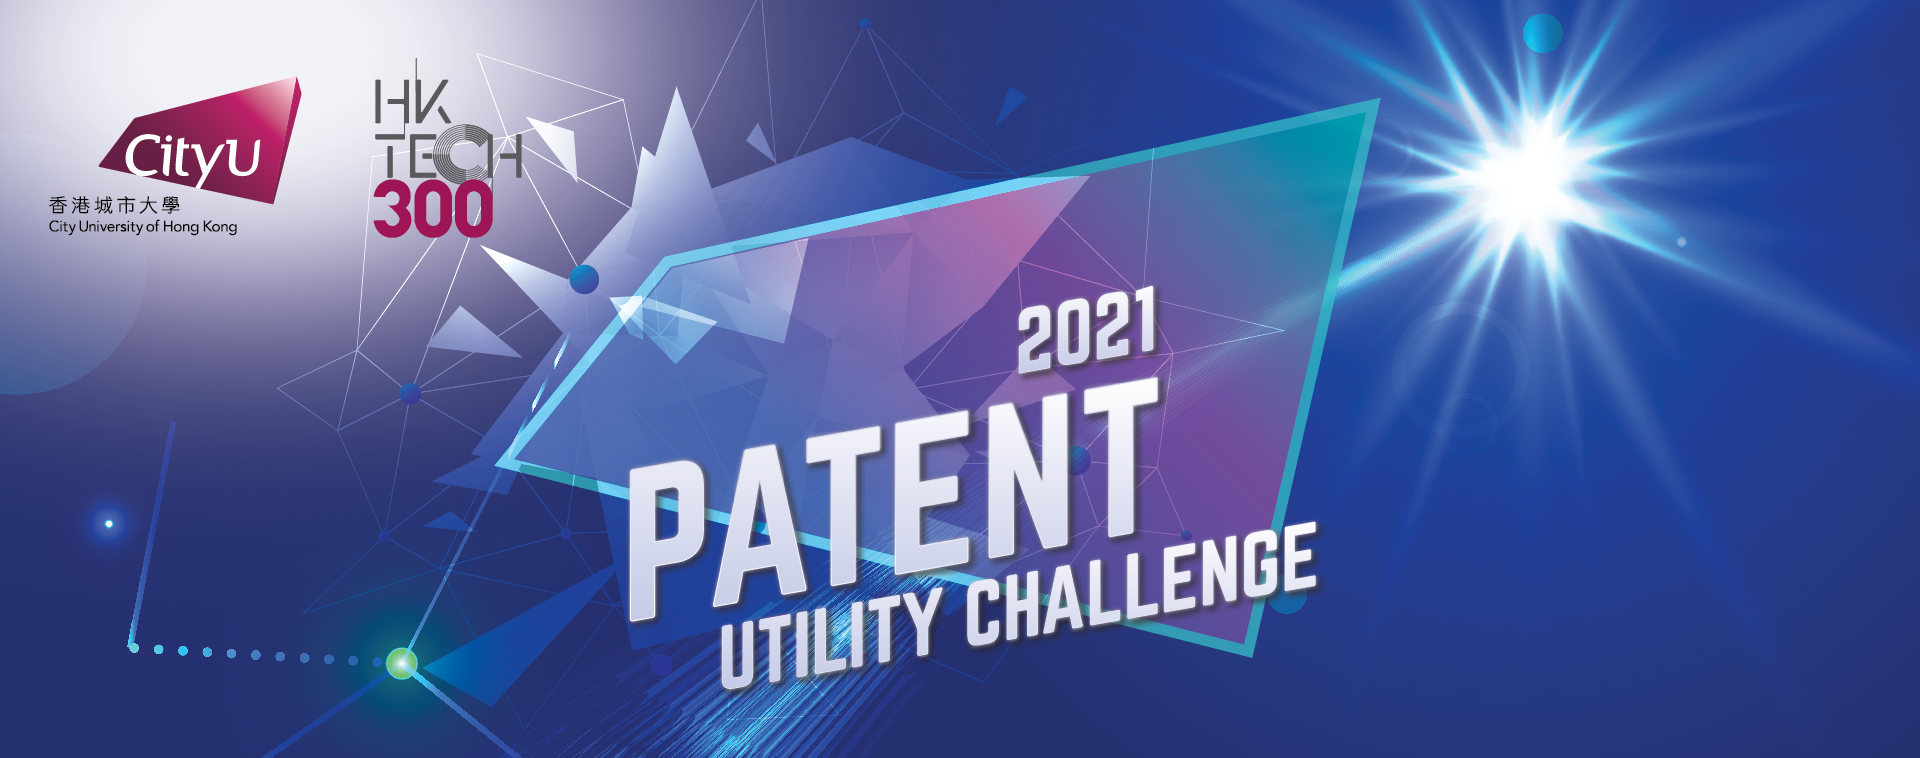 Patent Utility Challenge 2021 